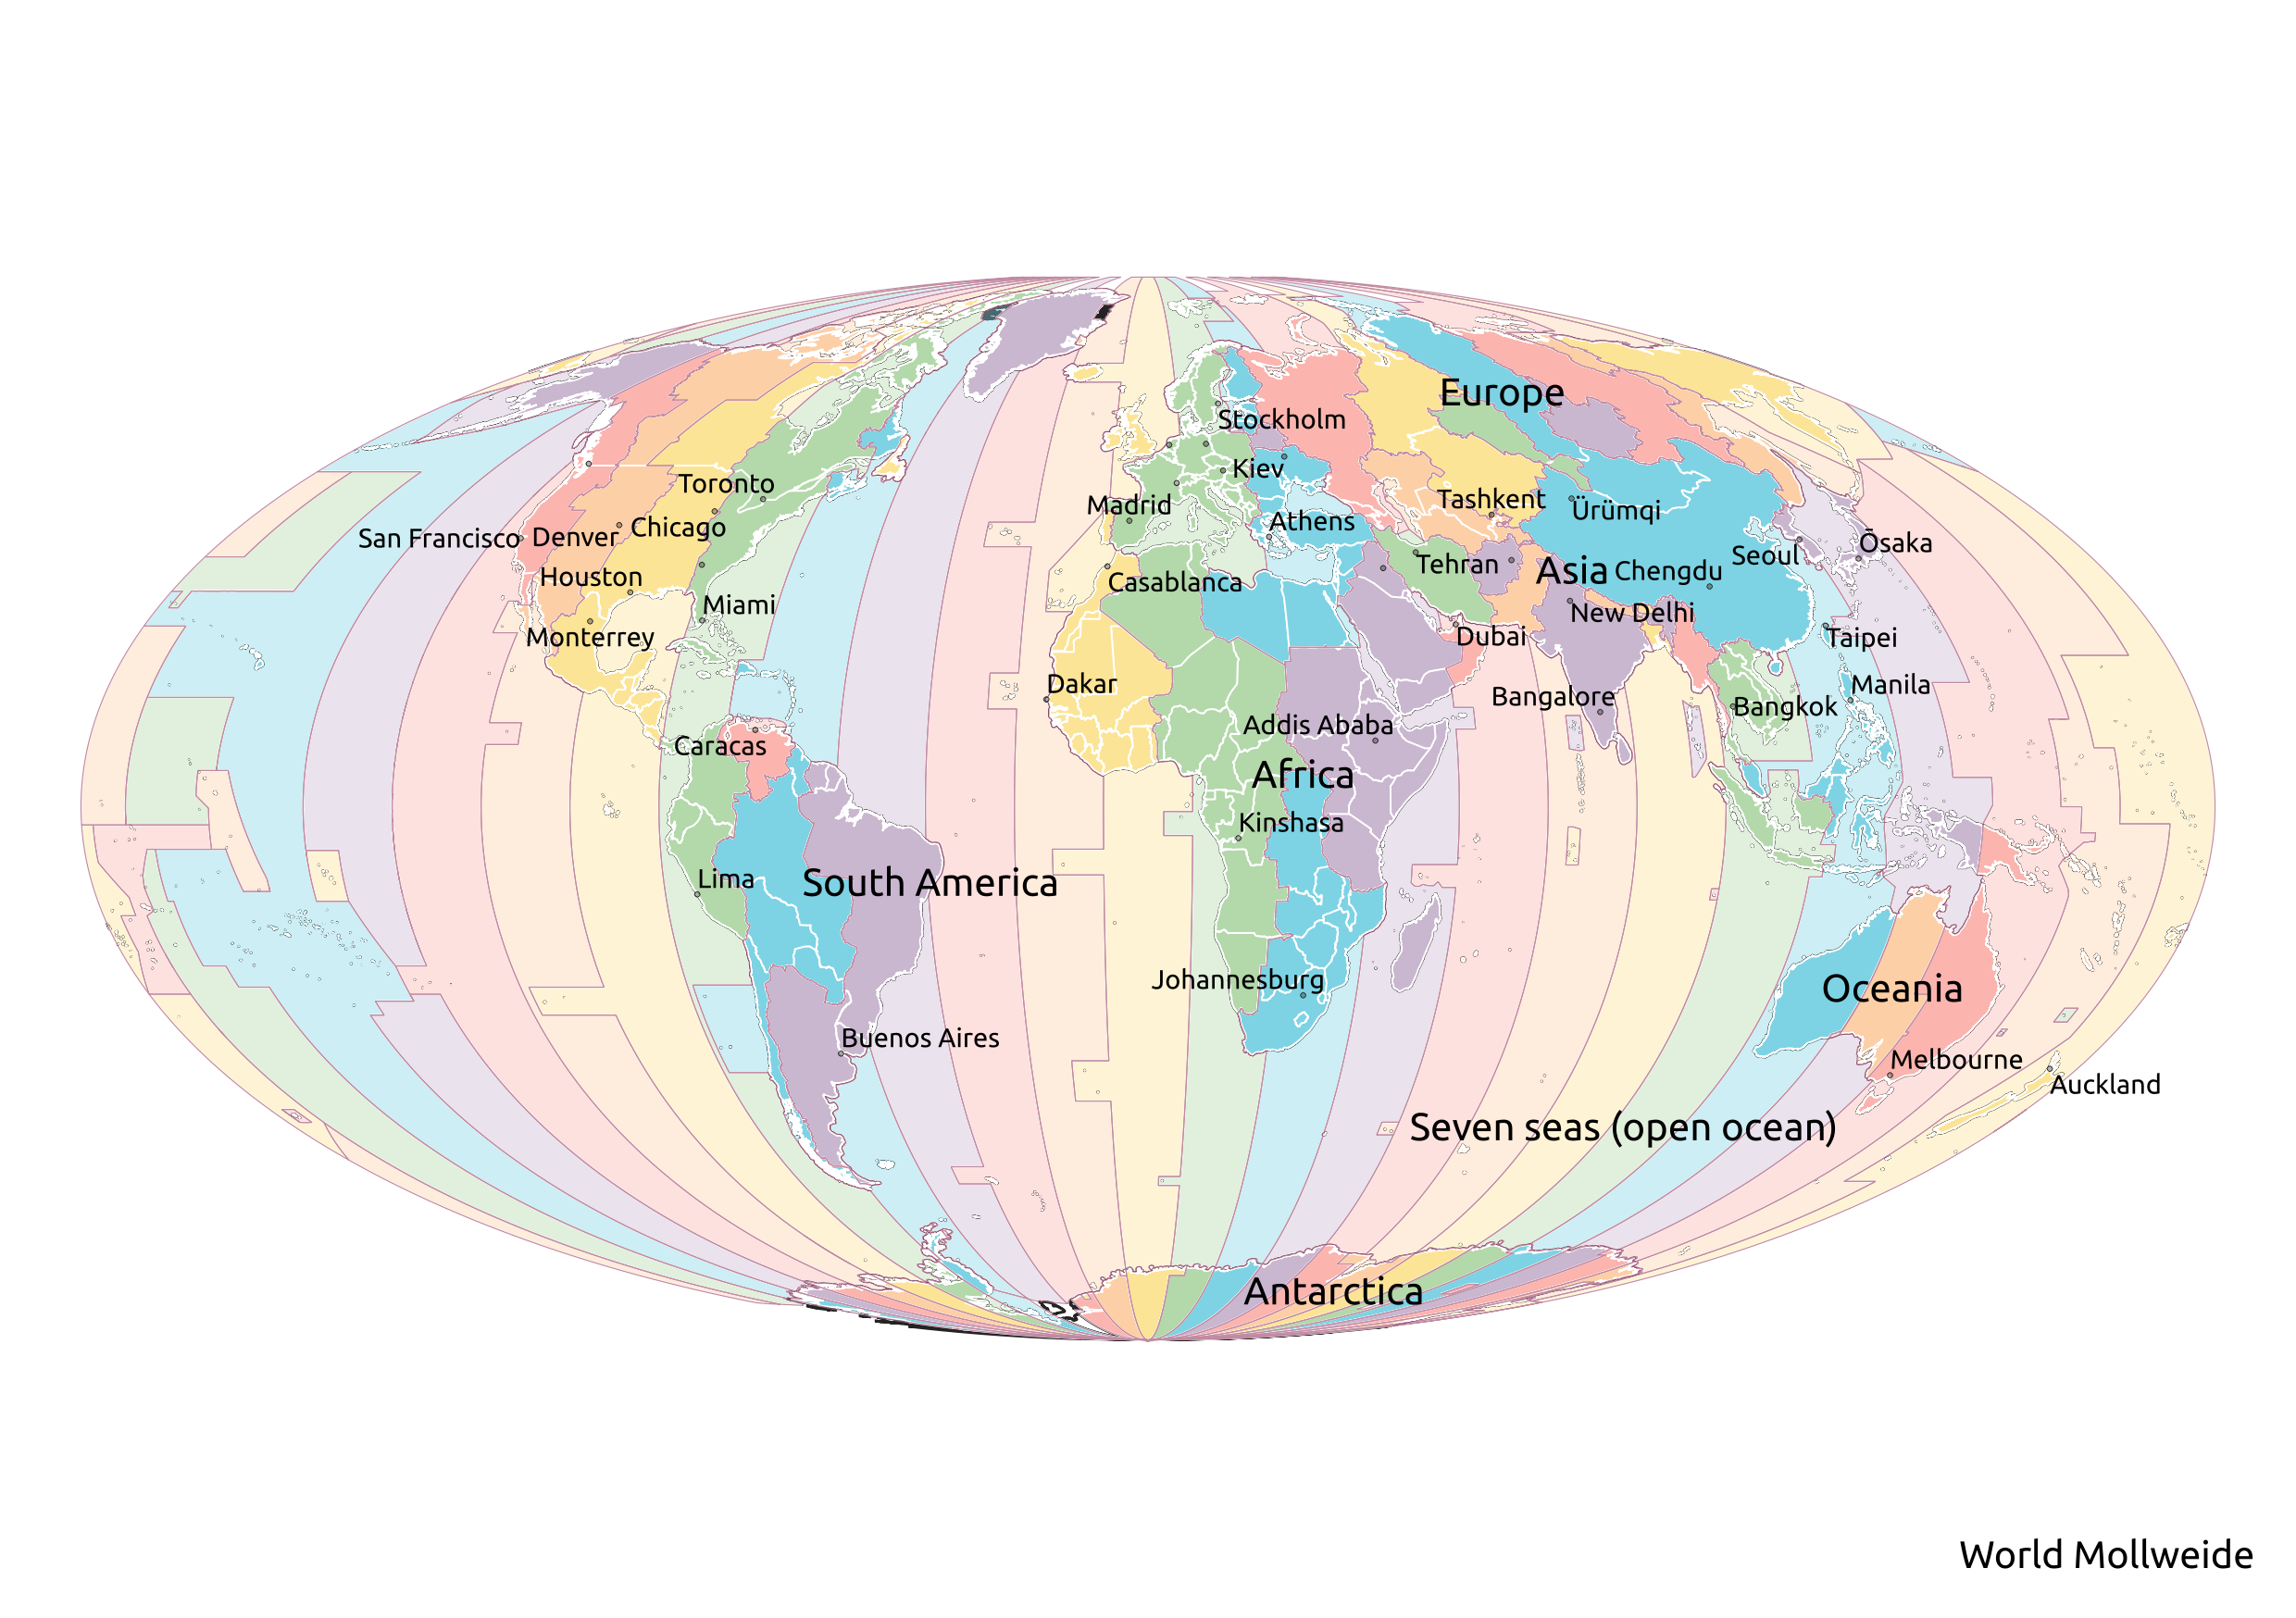 Mollweide world projection map